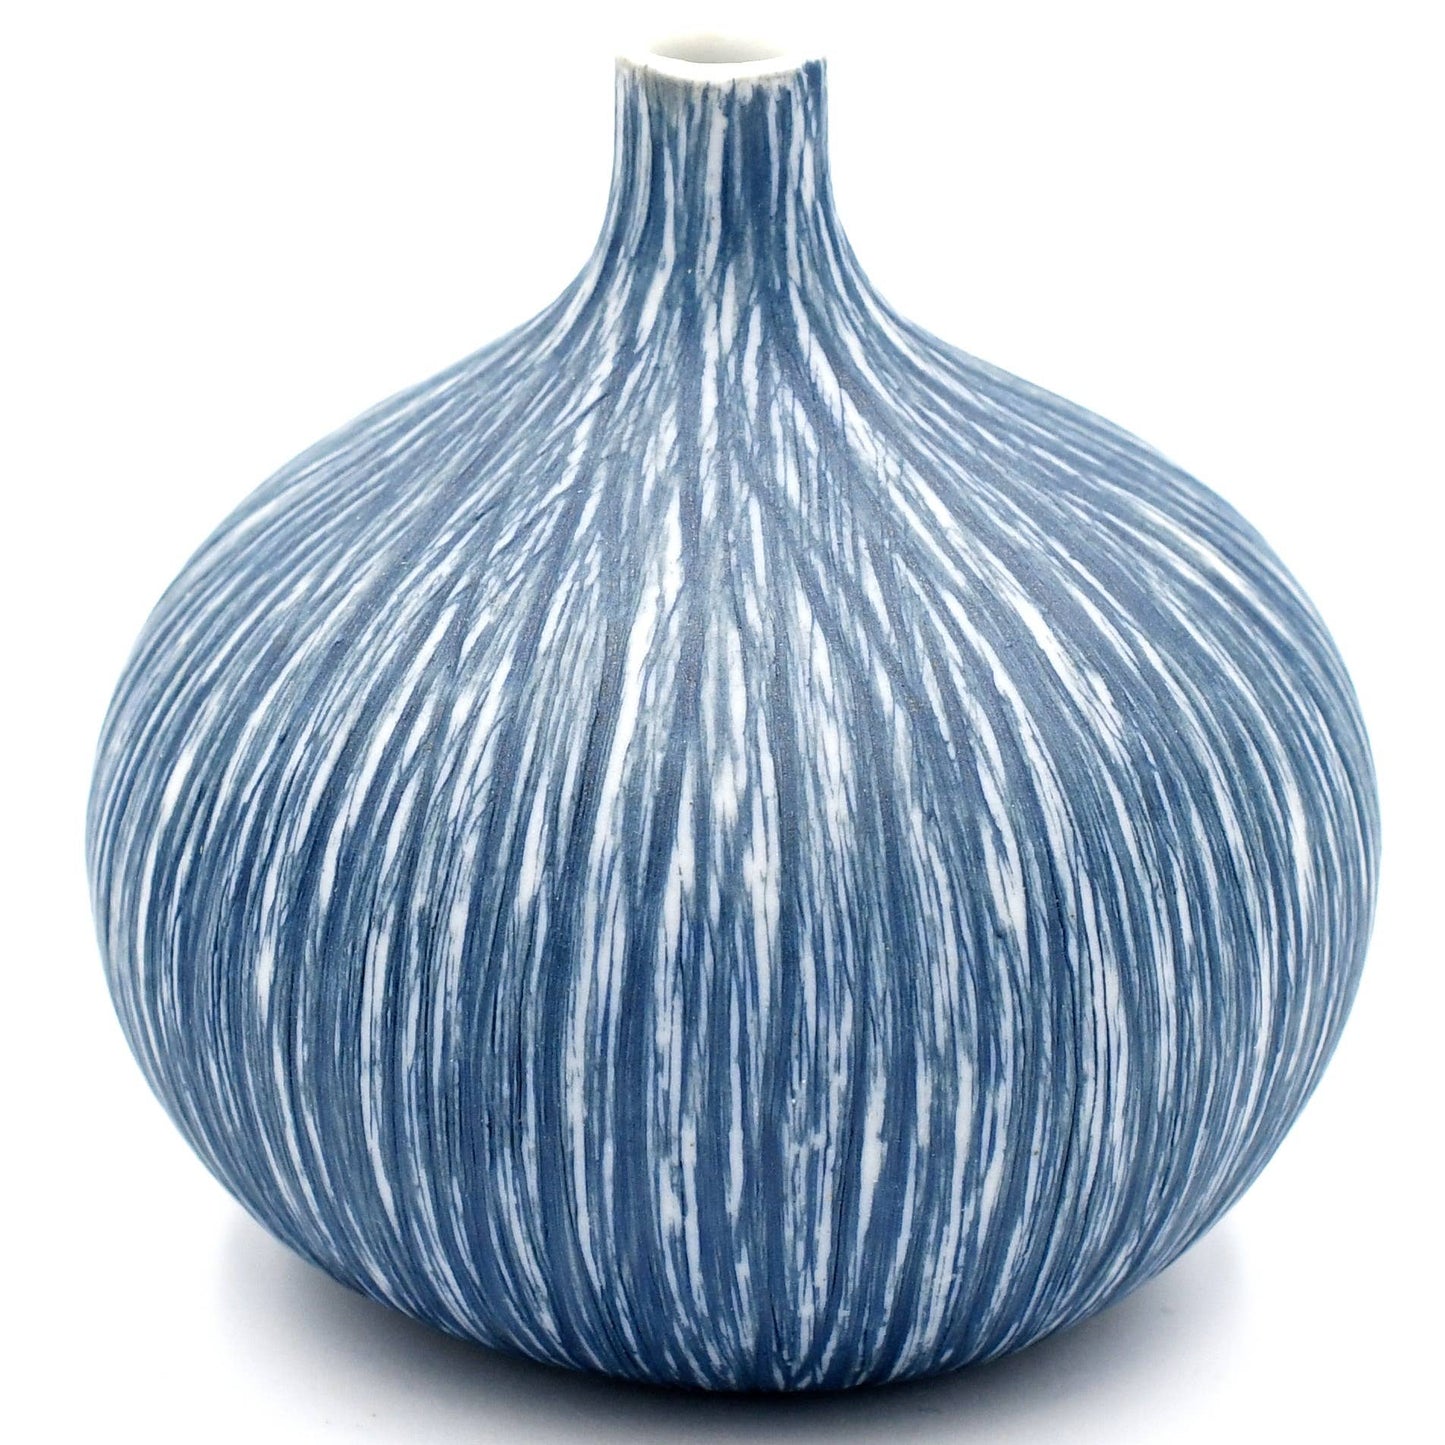 Art Floral Trading LLC - Tiny Blue Congo Porcelain Bud Vase - Blue with White Wisps